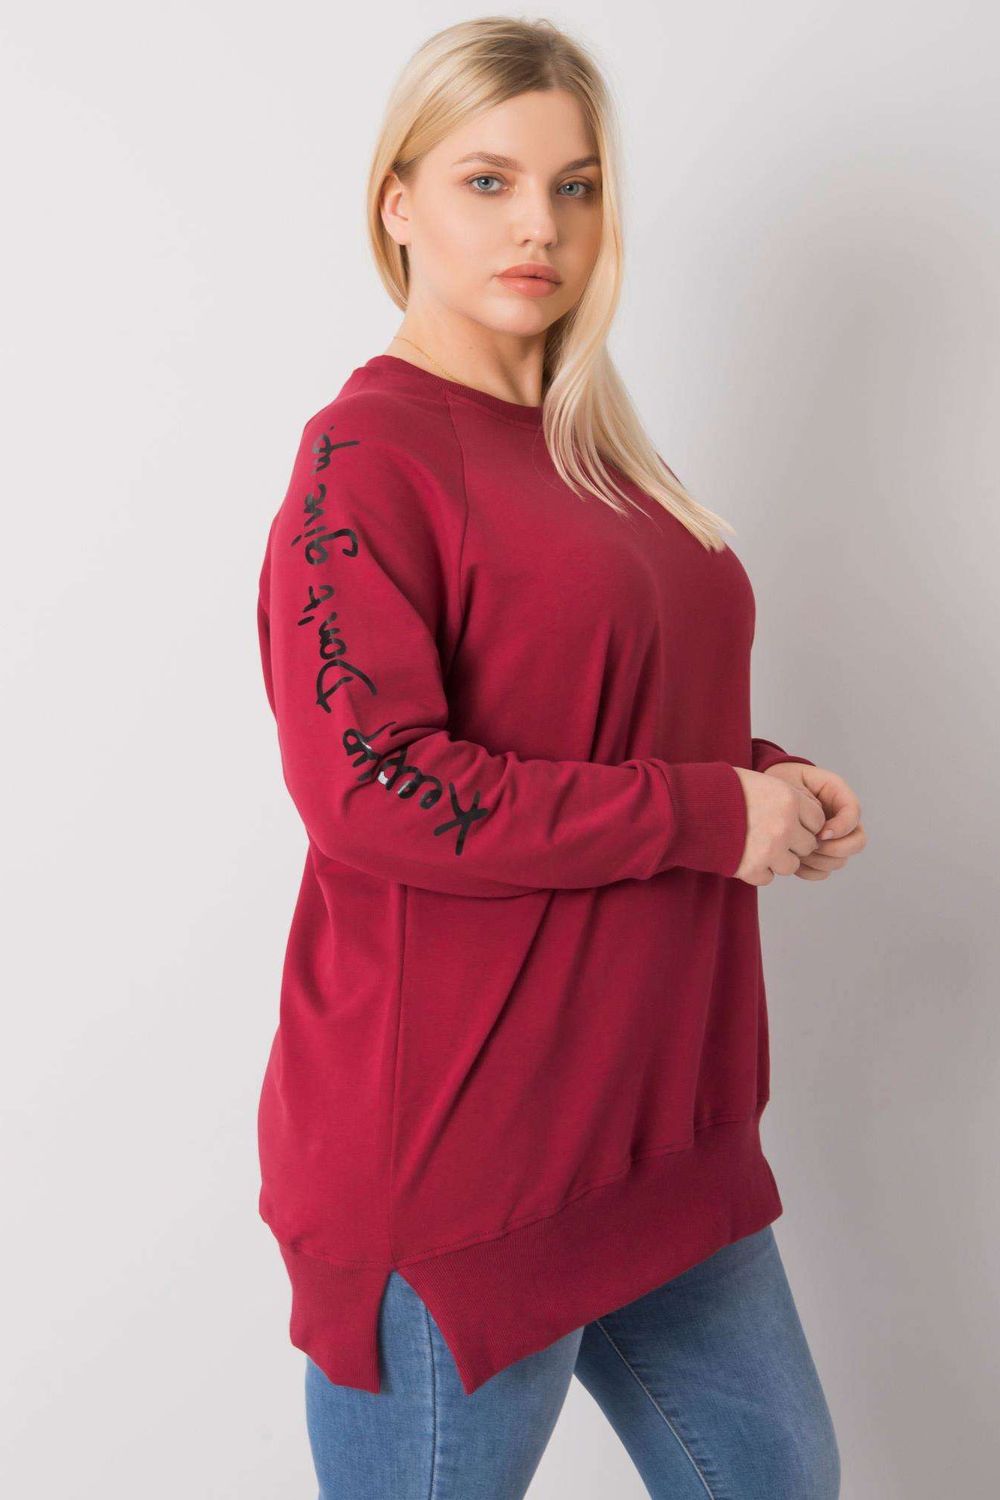 Sweatshirt model 160043 Elsy Style Sweatshirts for Women